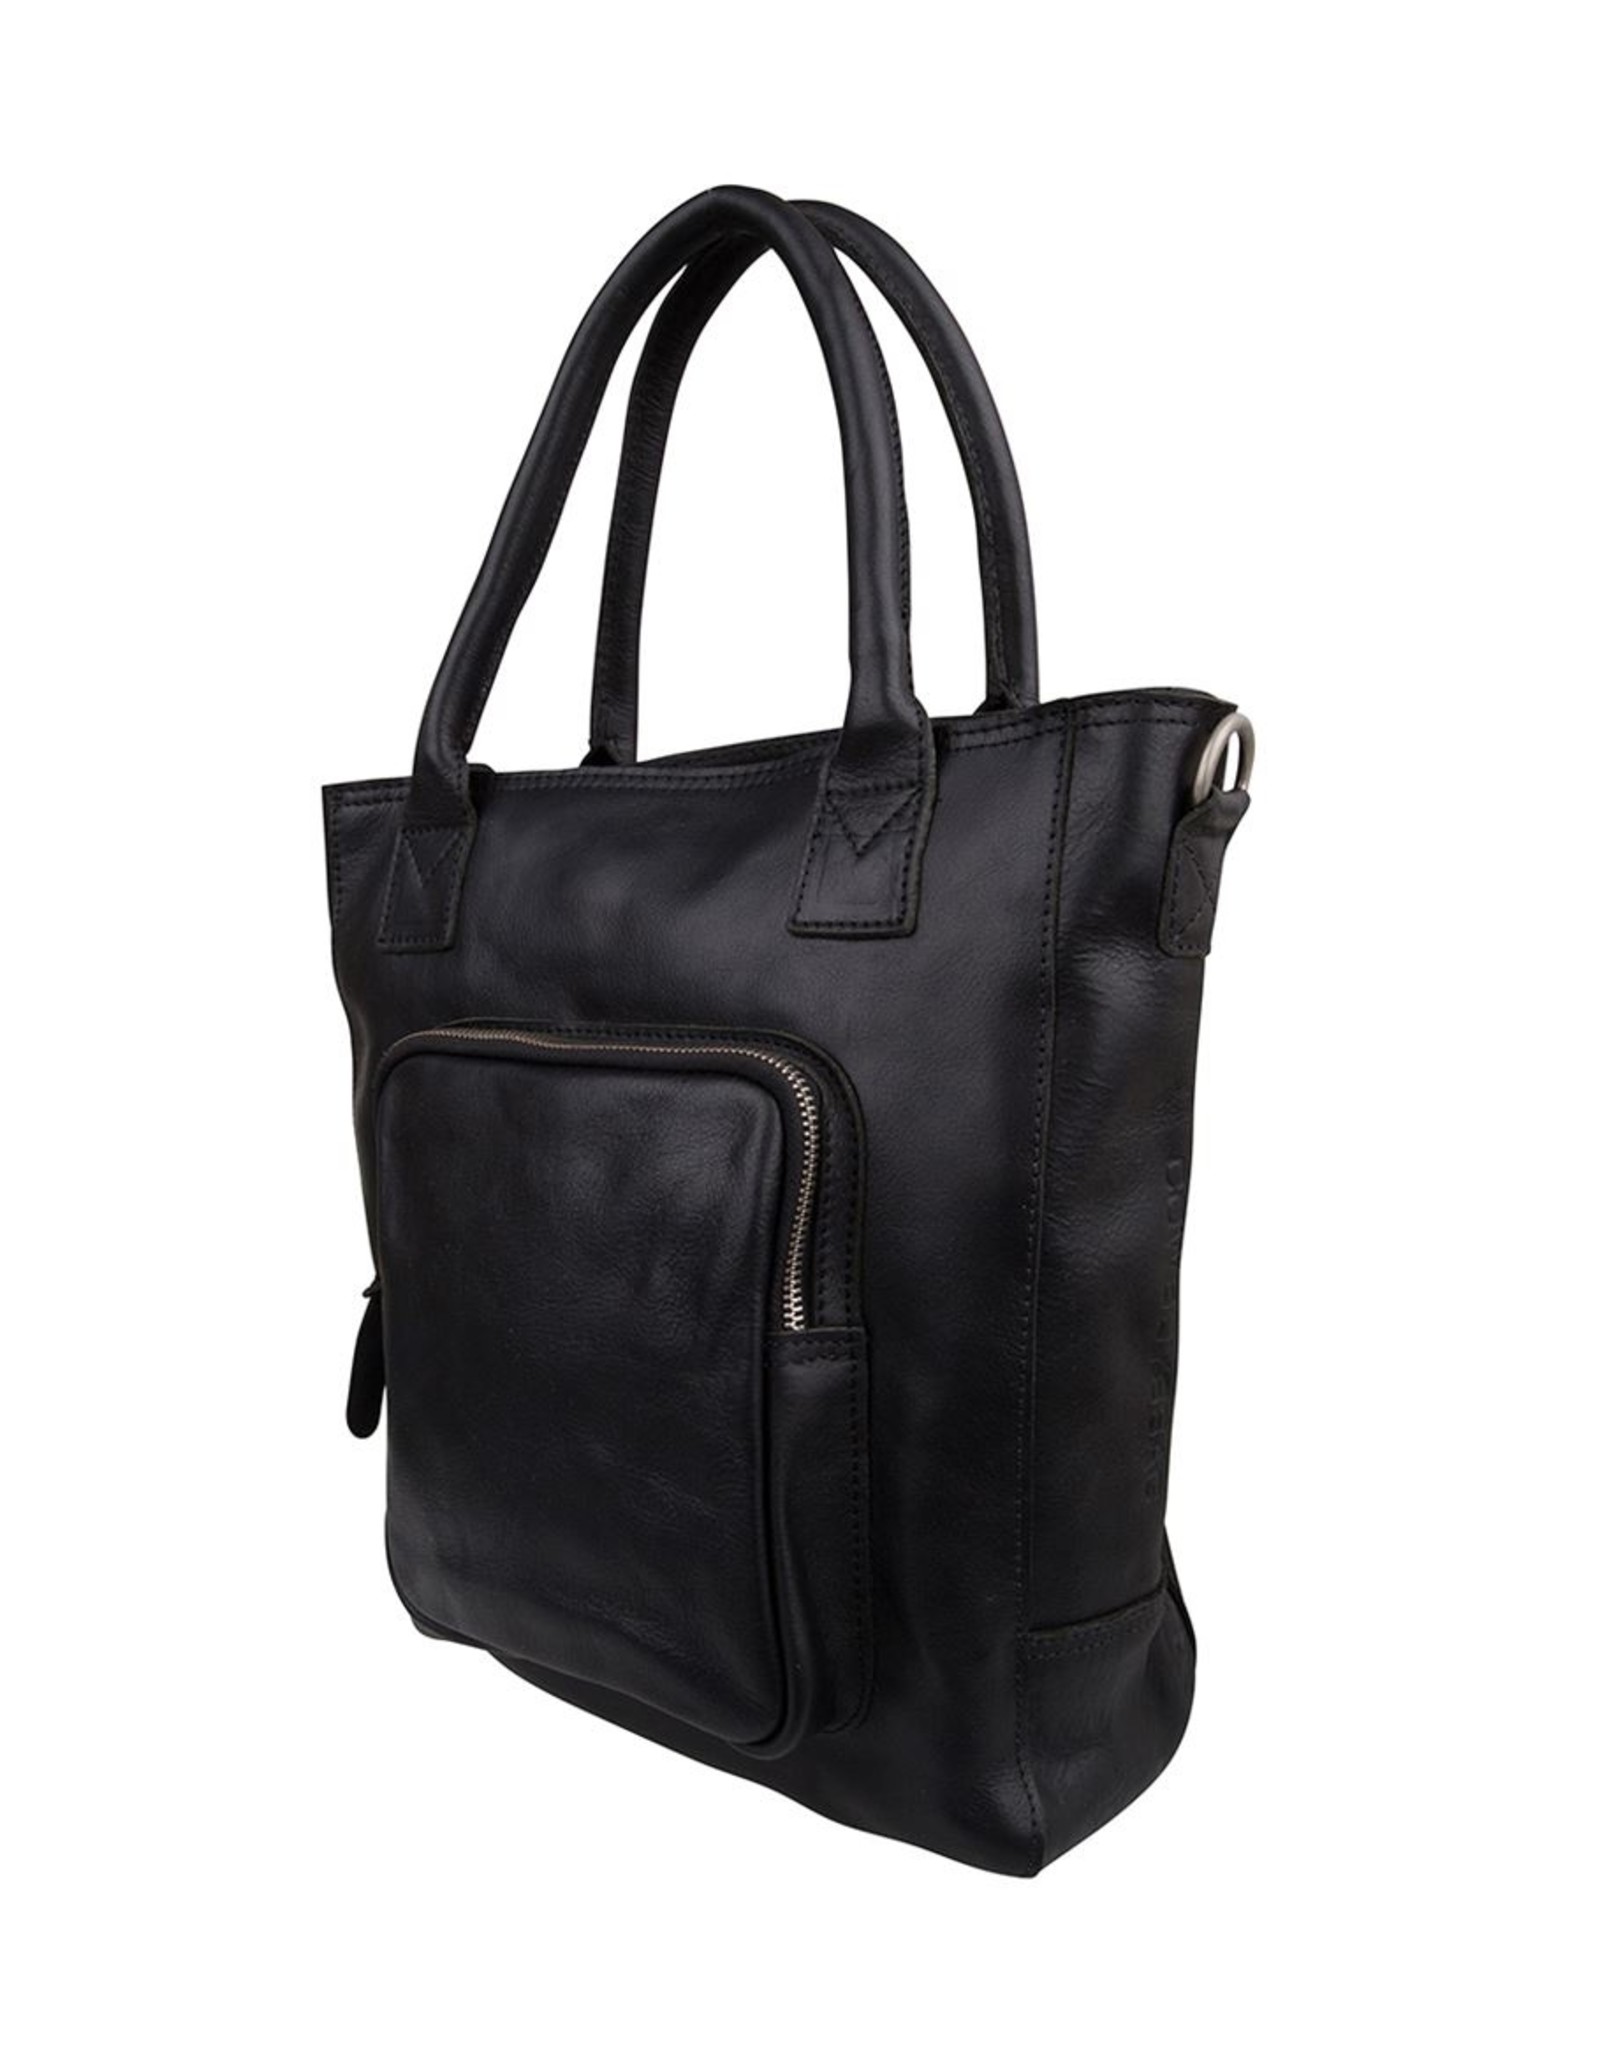 Cowboysbag Leather bags - Leather Bag Cowboysbag Mellor Black